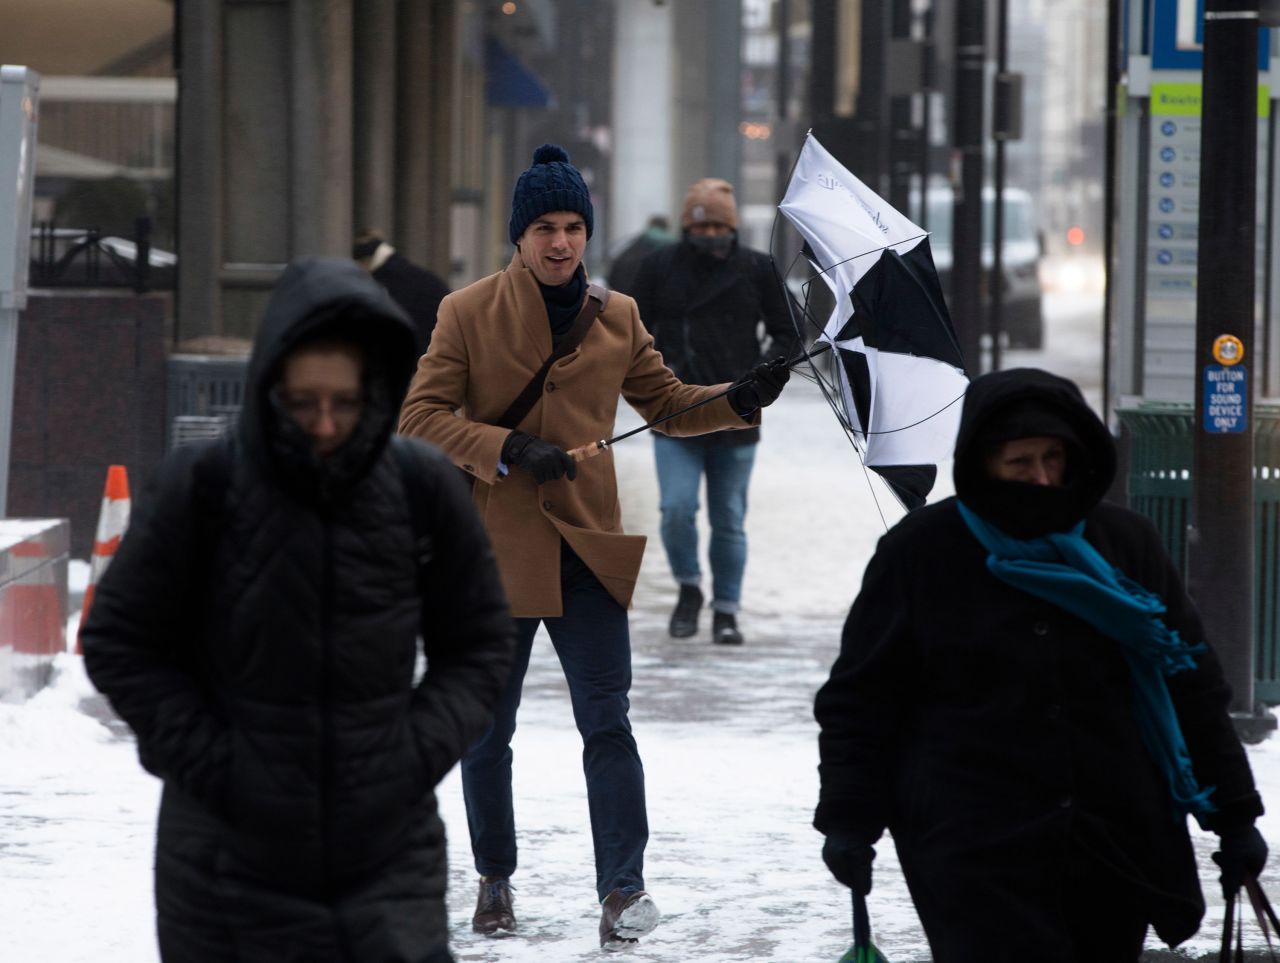 Pedestrians walk through a winter storm in downtown Cincinnati on January 30.